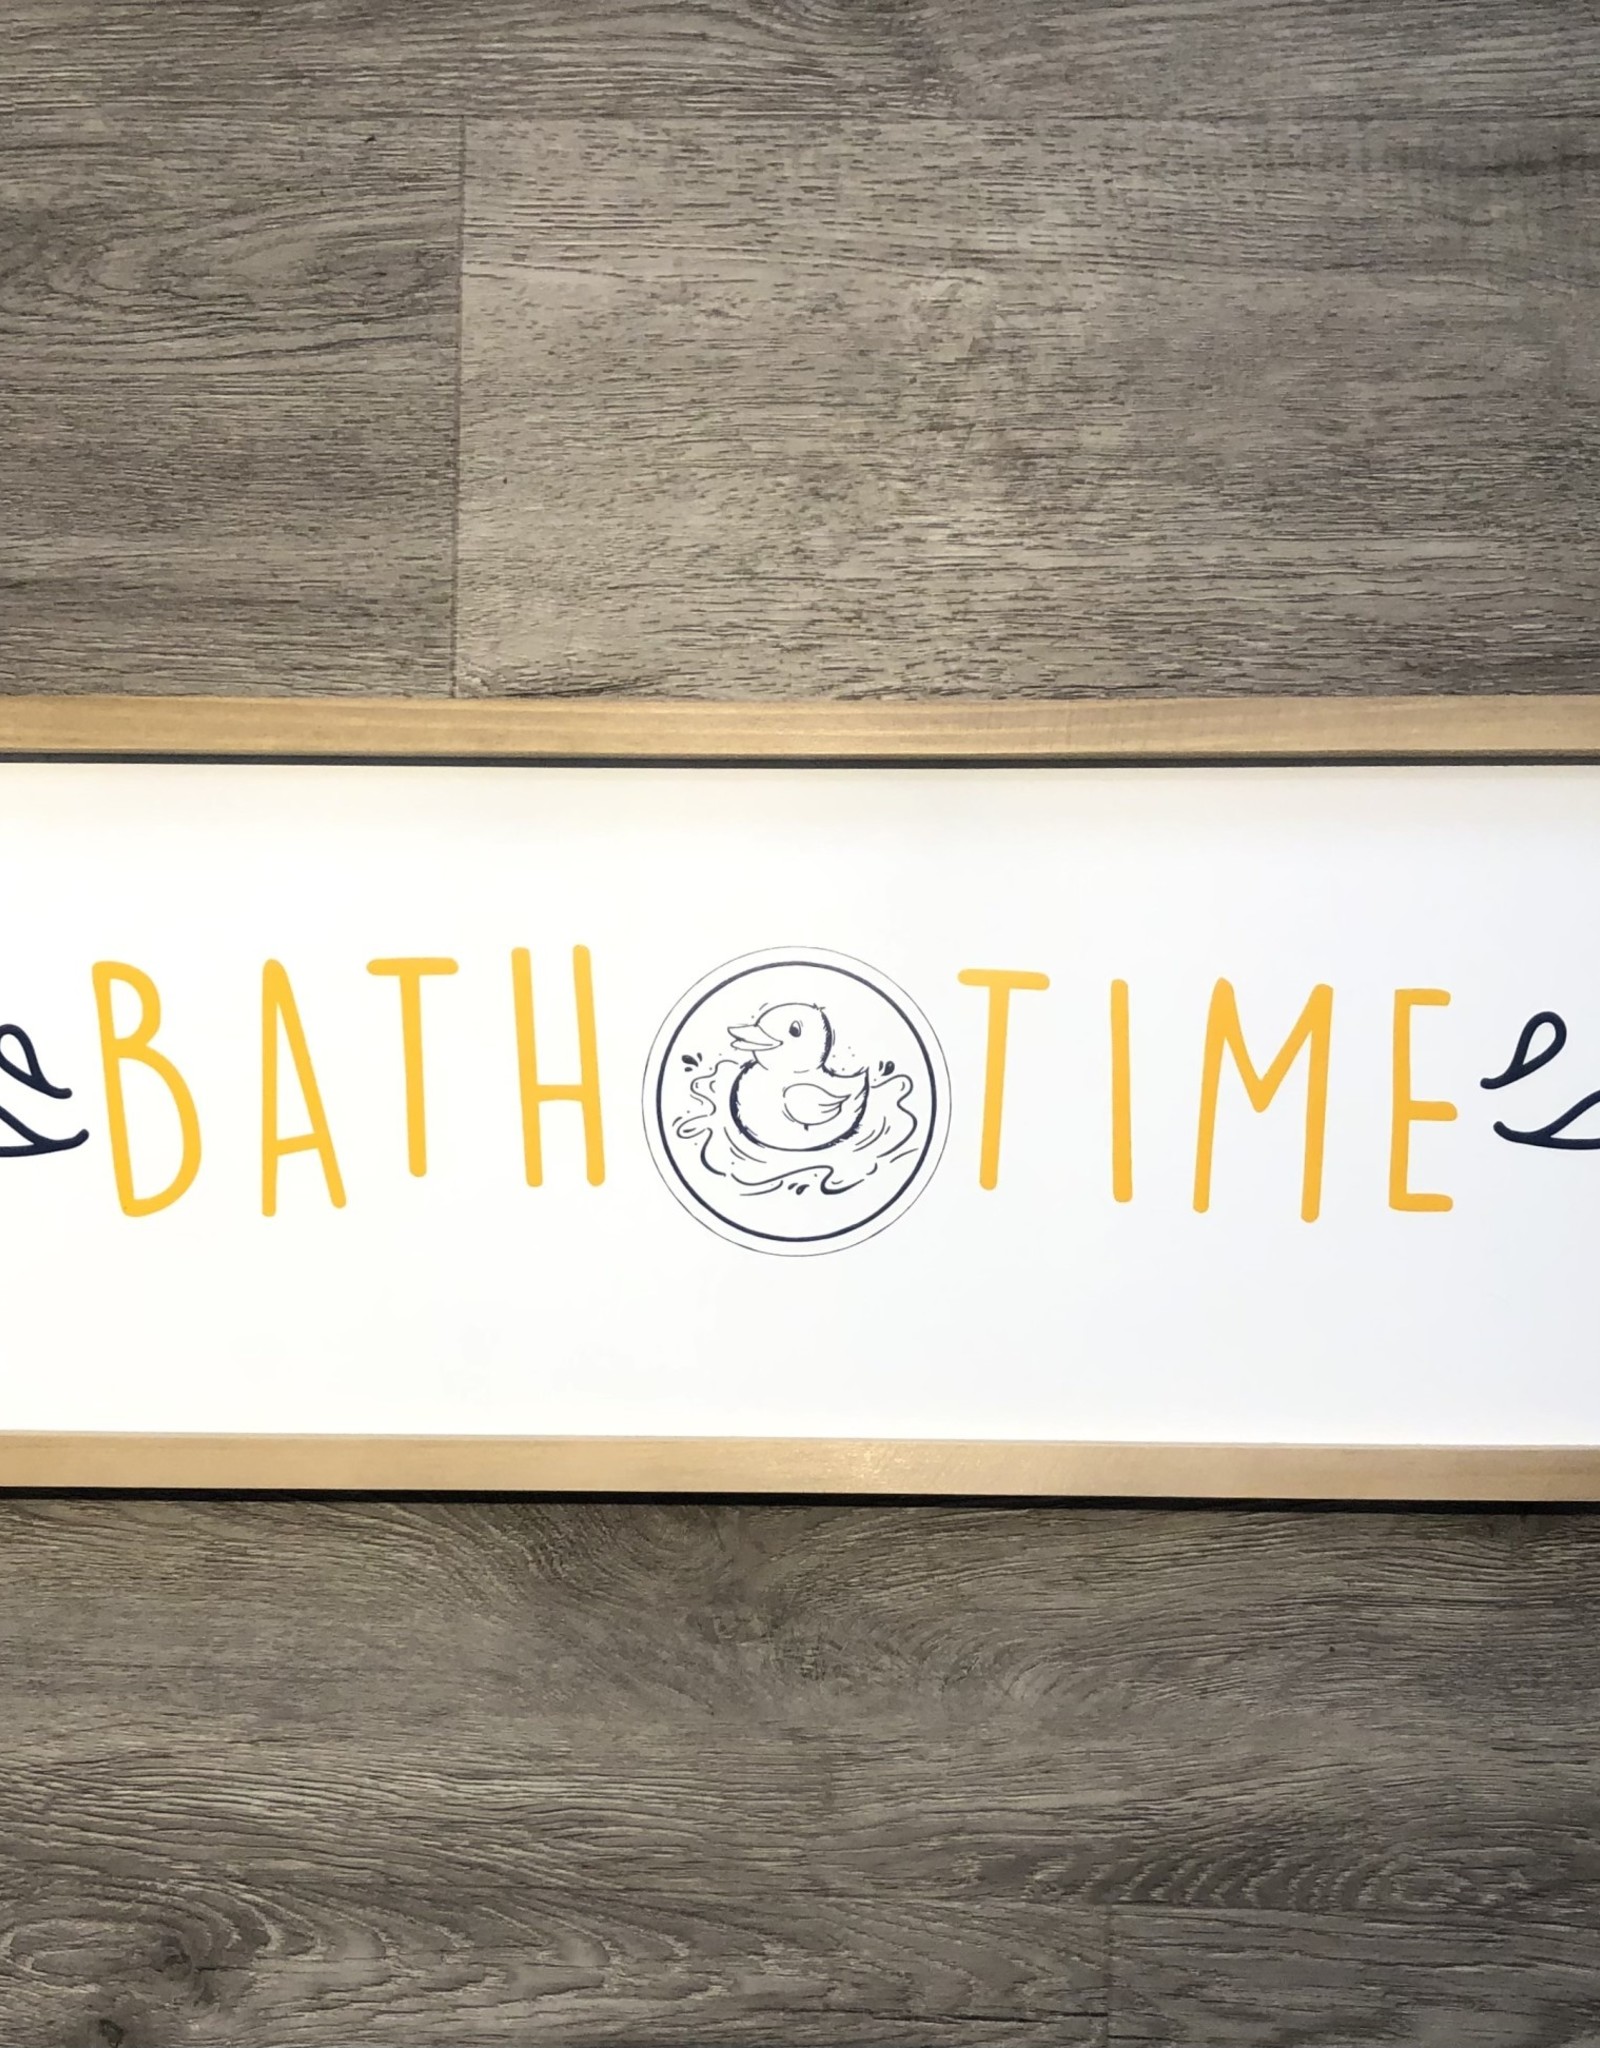 Splash International Bath Time Duck sign